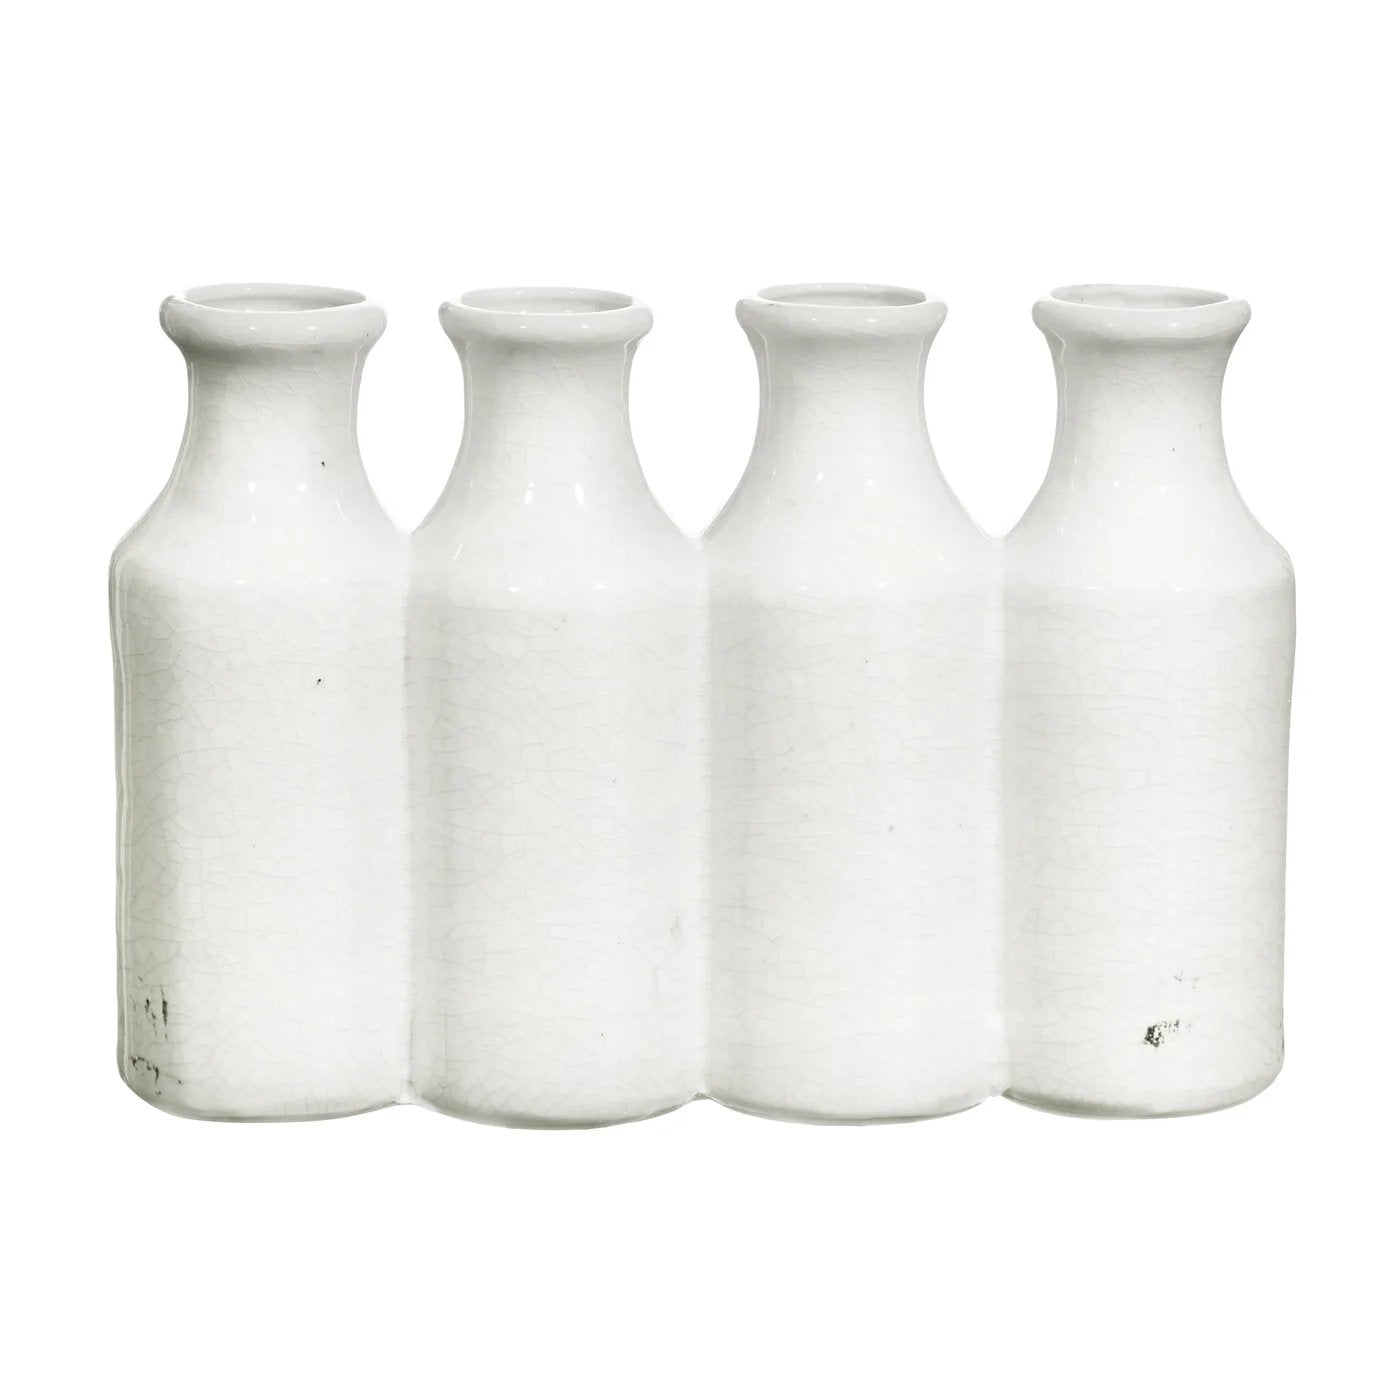 Winward Antique White Milk Bottle Vase